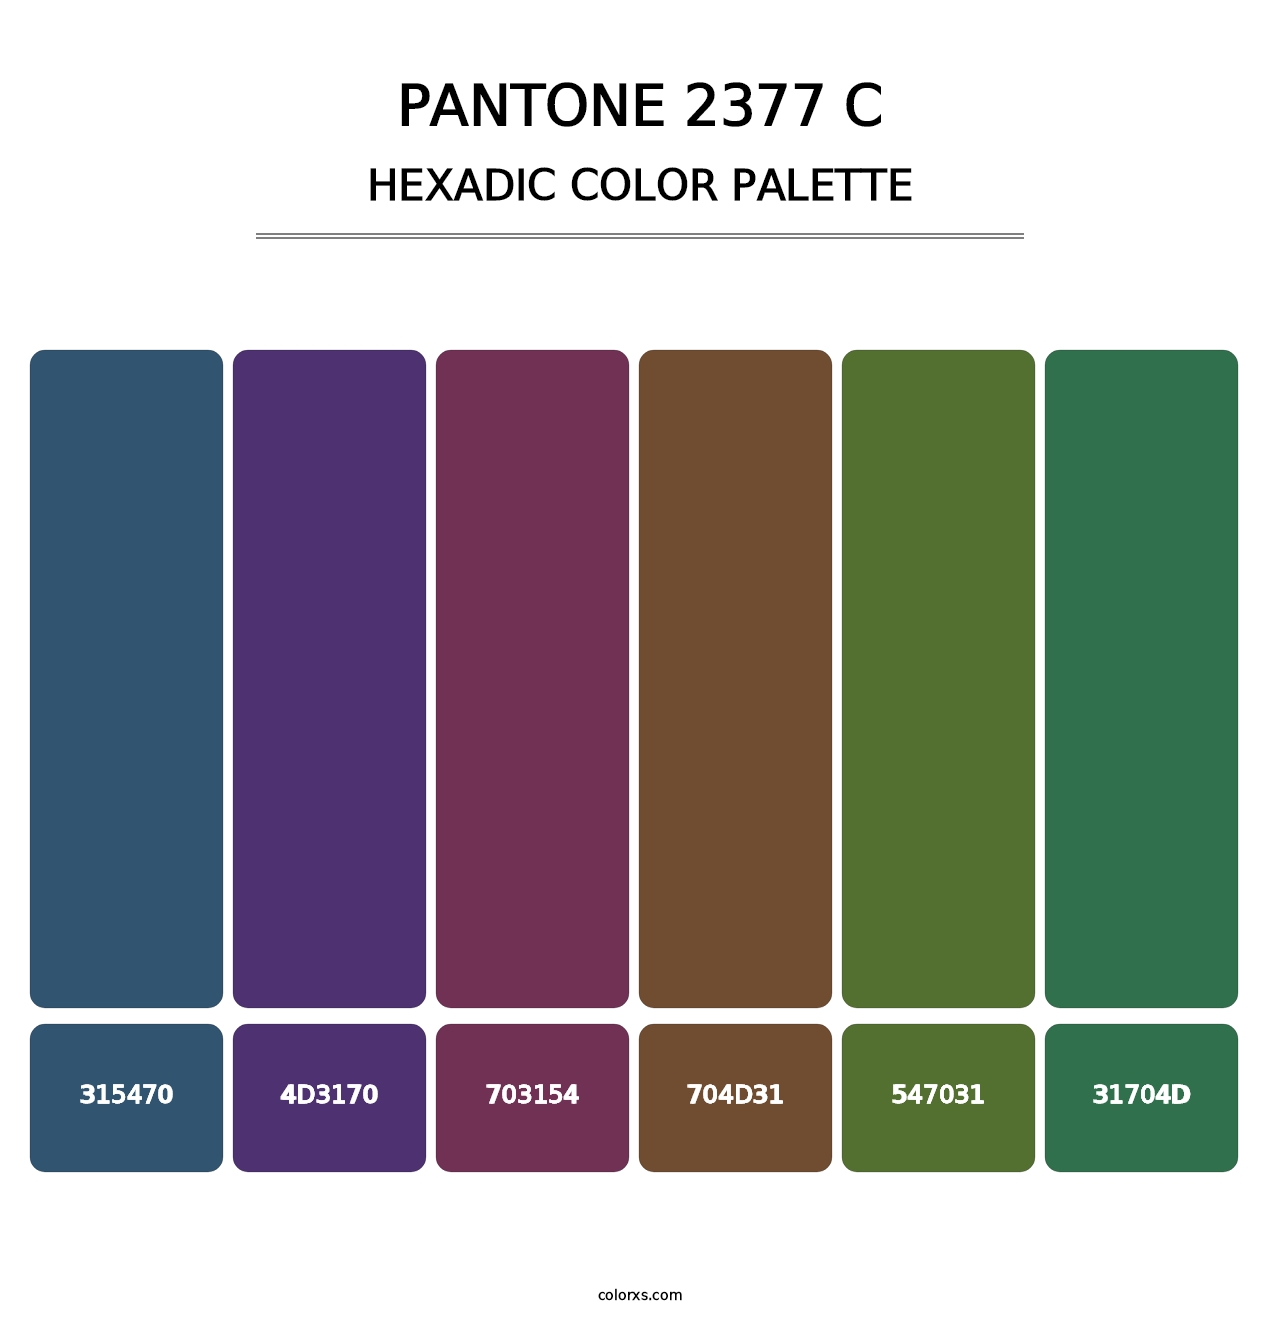 PANTONE 2377 C - Hexadic Color Palette